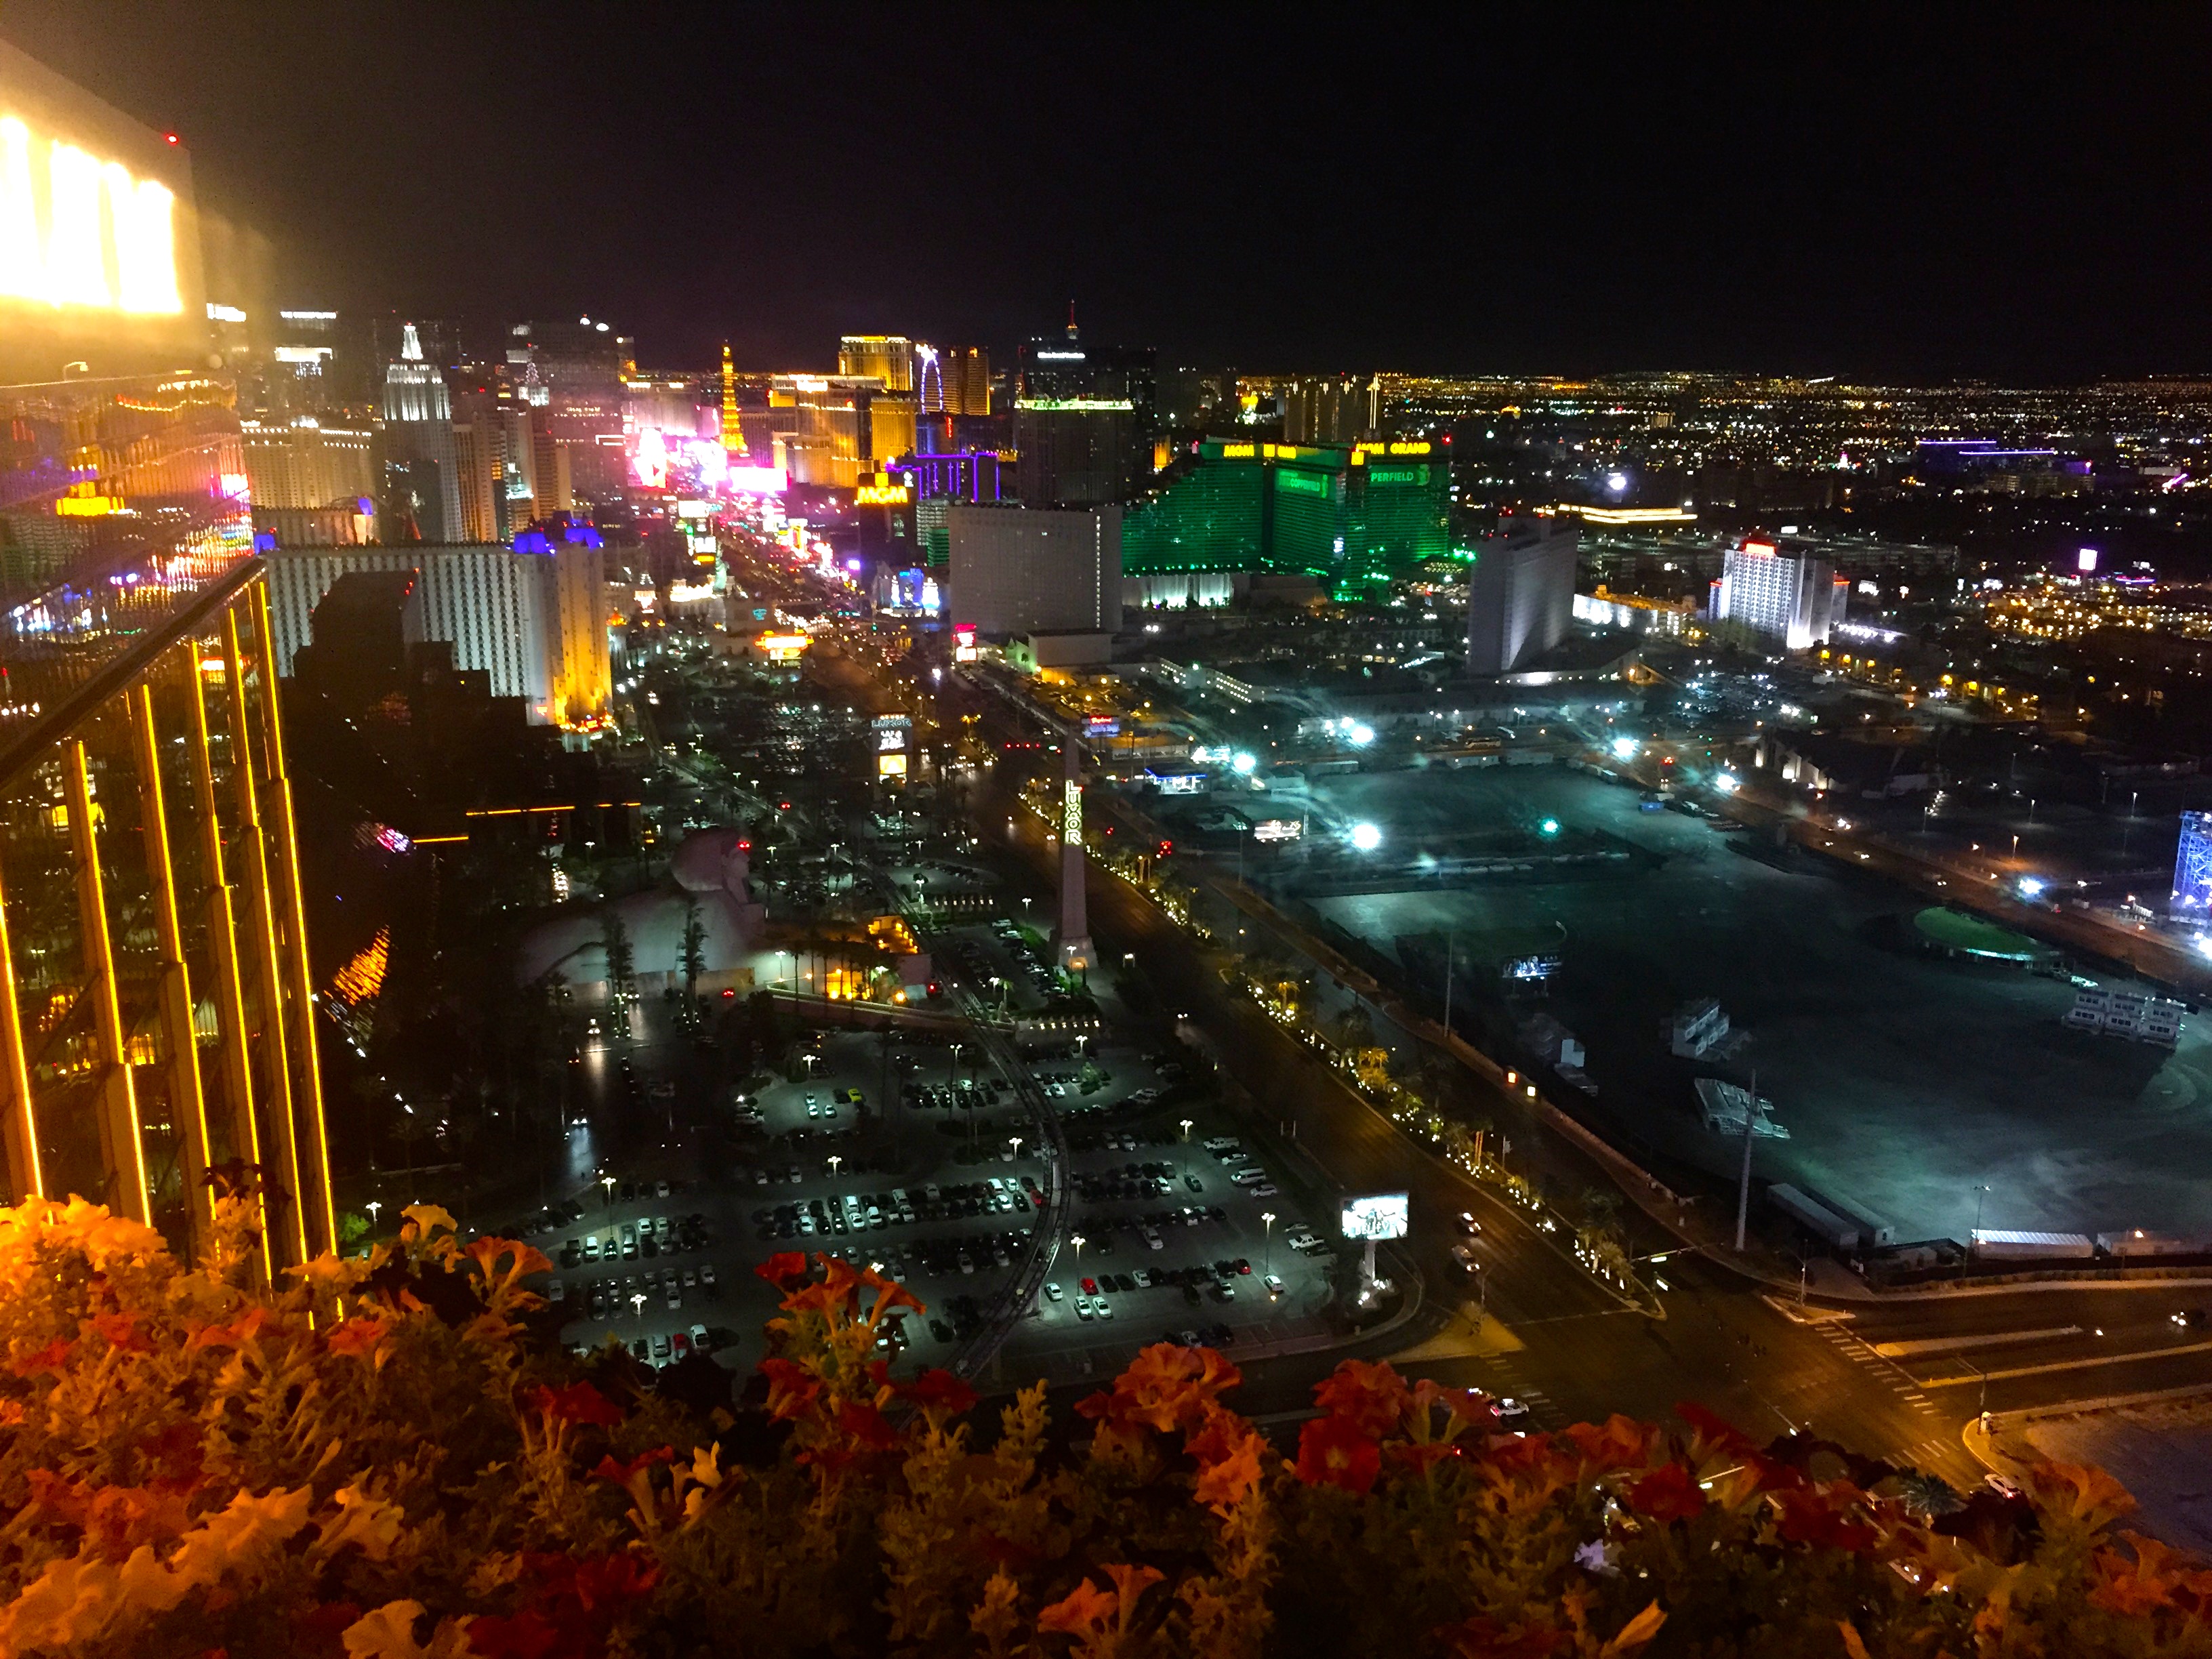 2017 Las Vegas shooting - Wikipedia